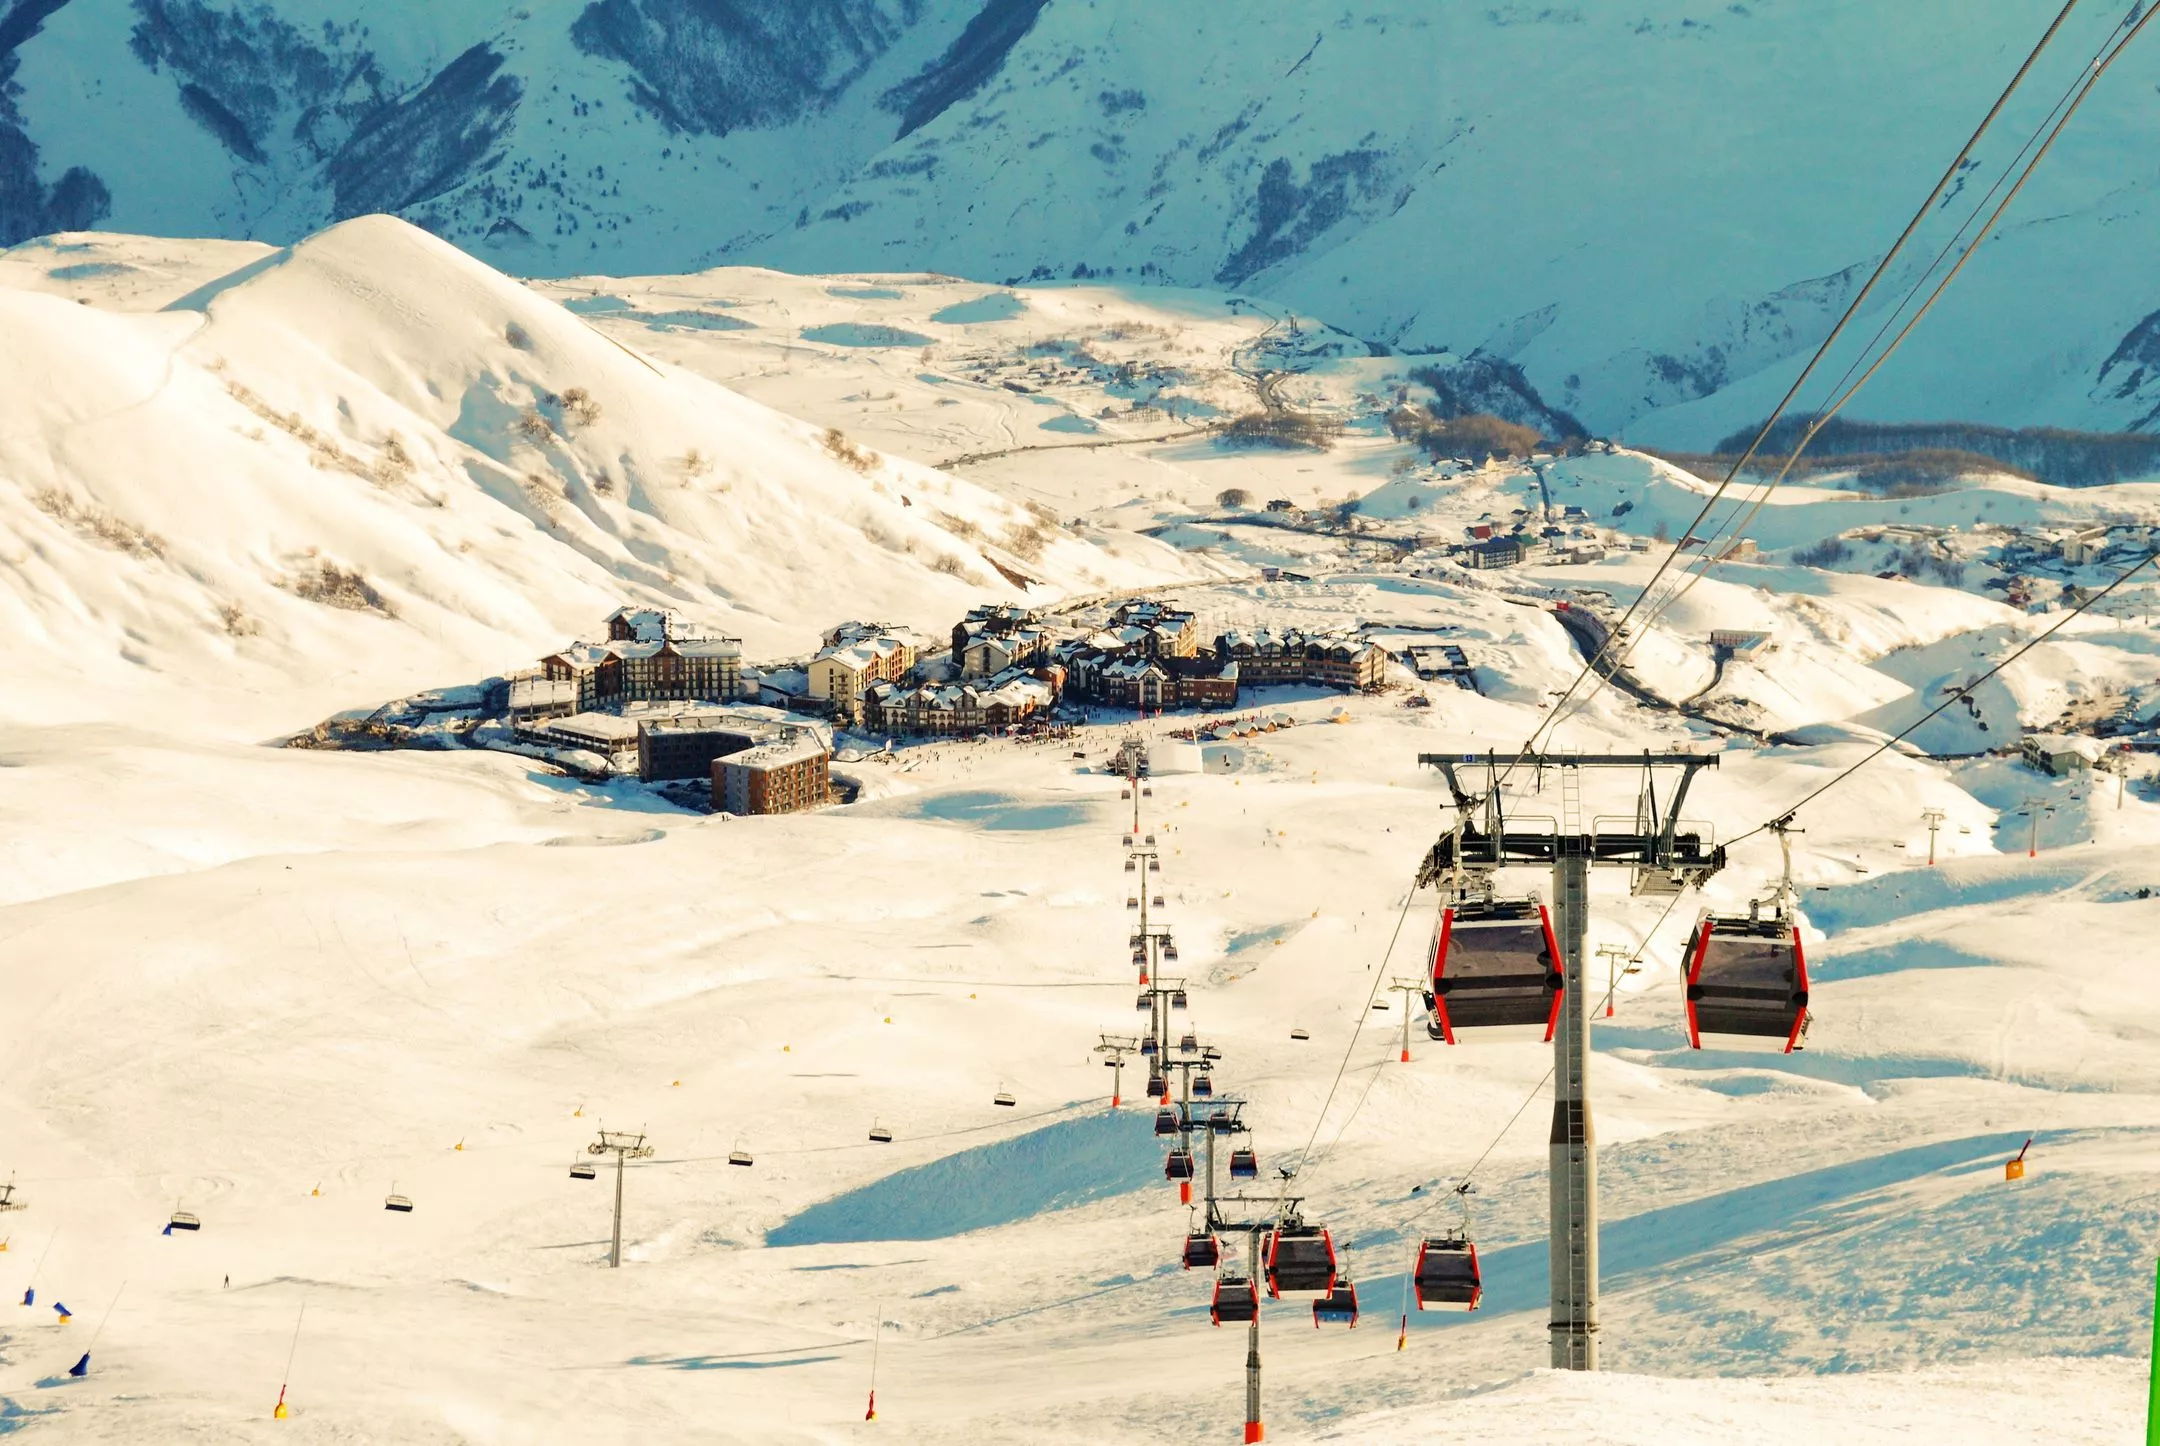 Bakuriani Ski Resort in Georgia, Europe | Snowboarding,Skiing - Rated 4